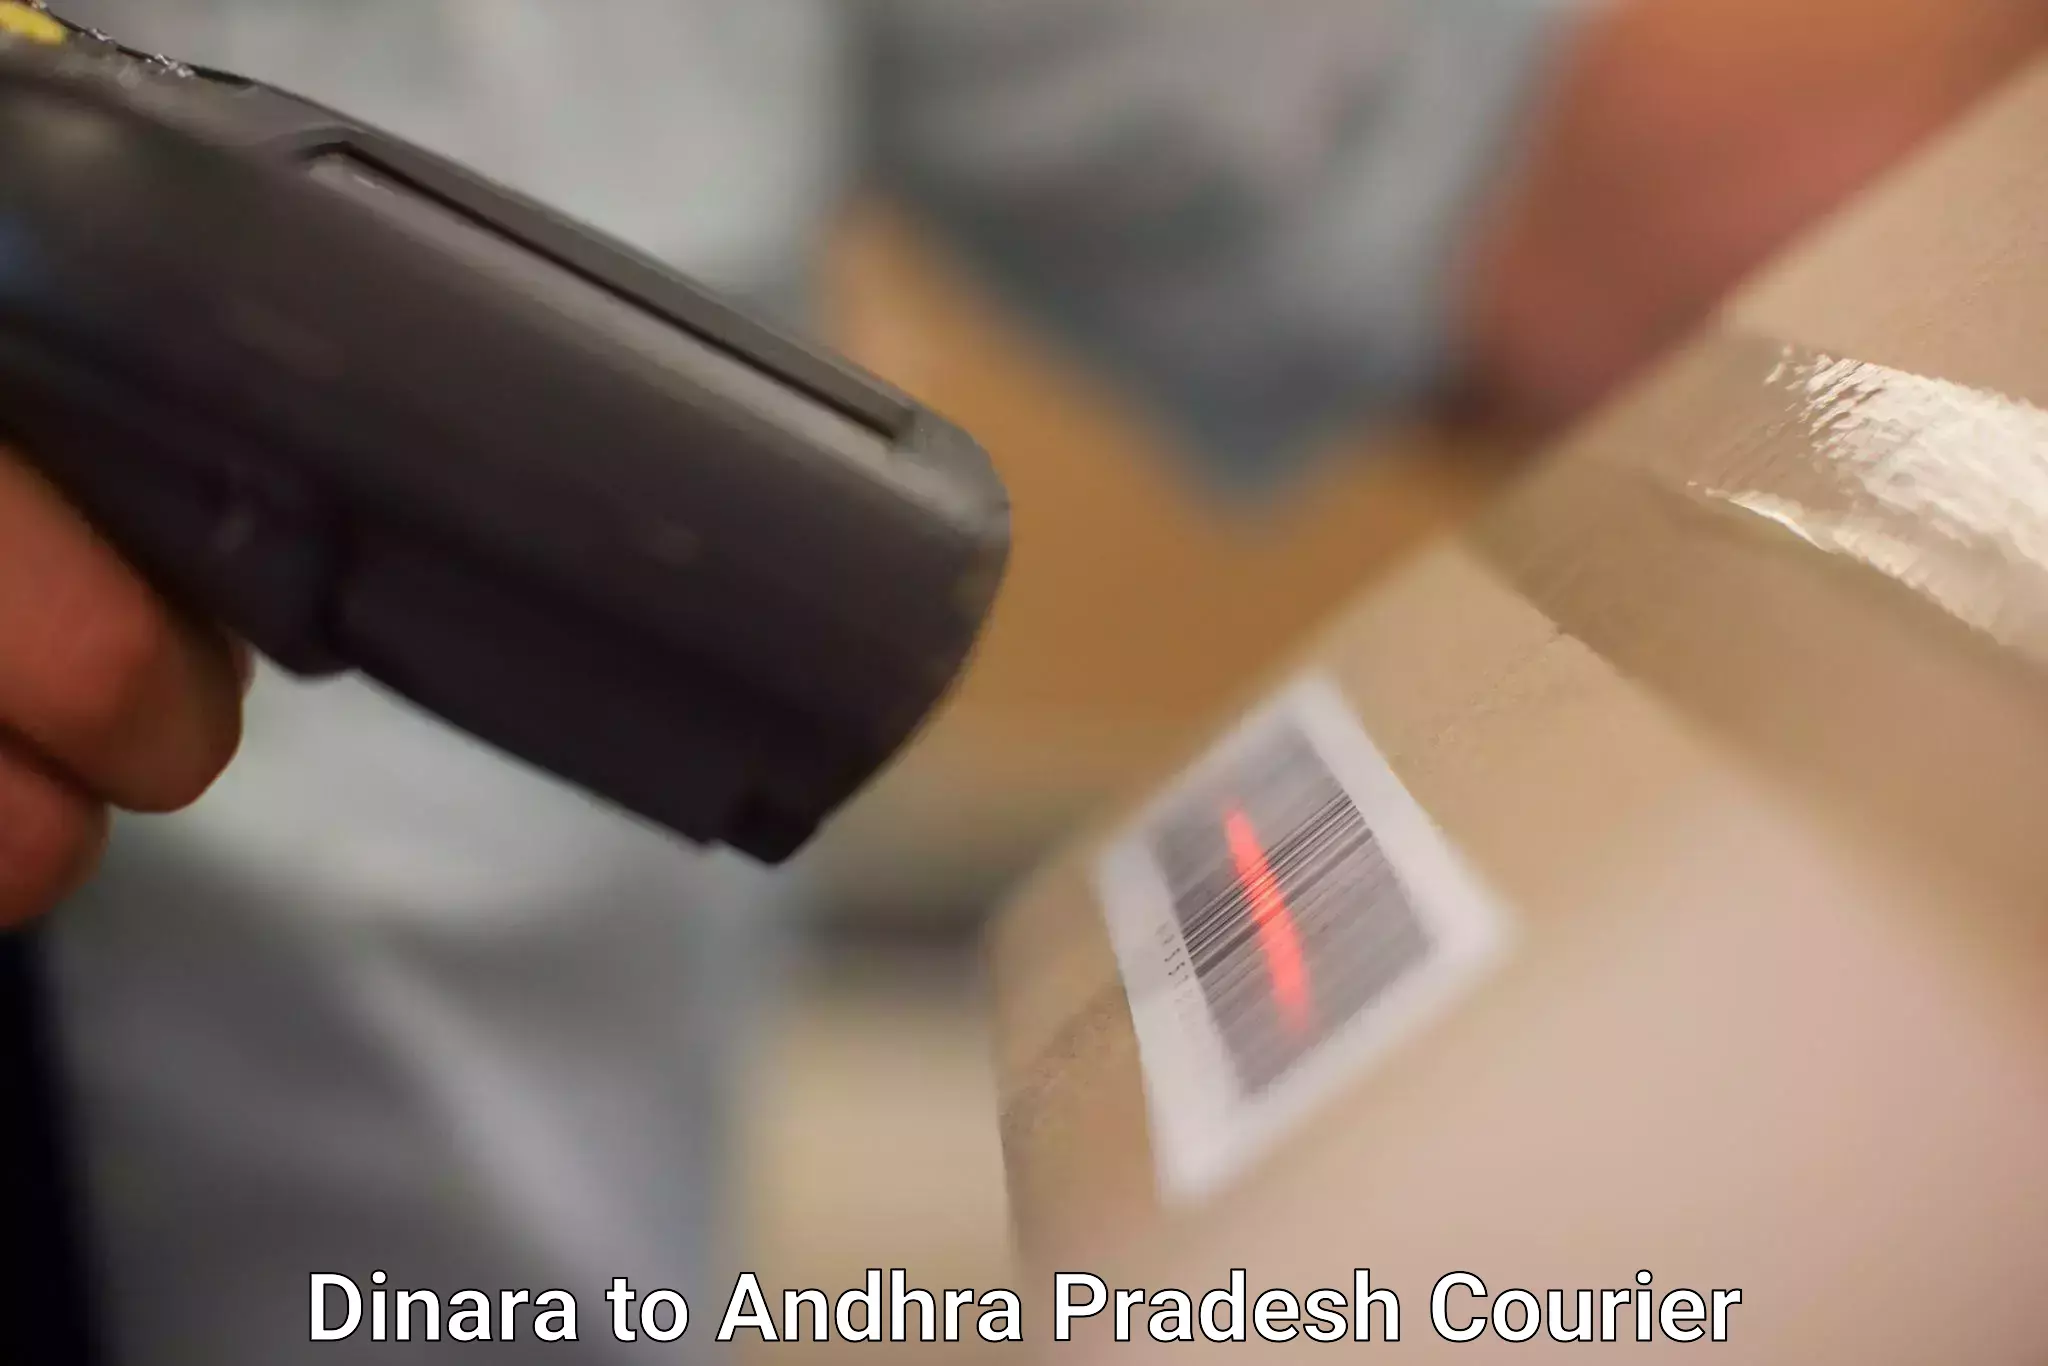 Courier service partnerships in Dinara to Andhra Pradesh